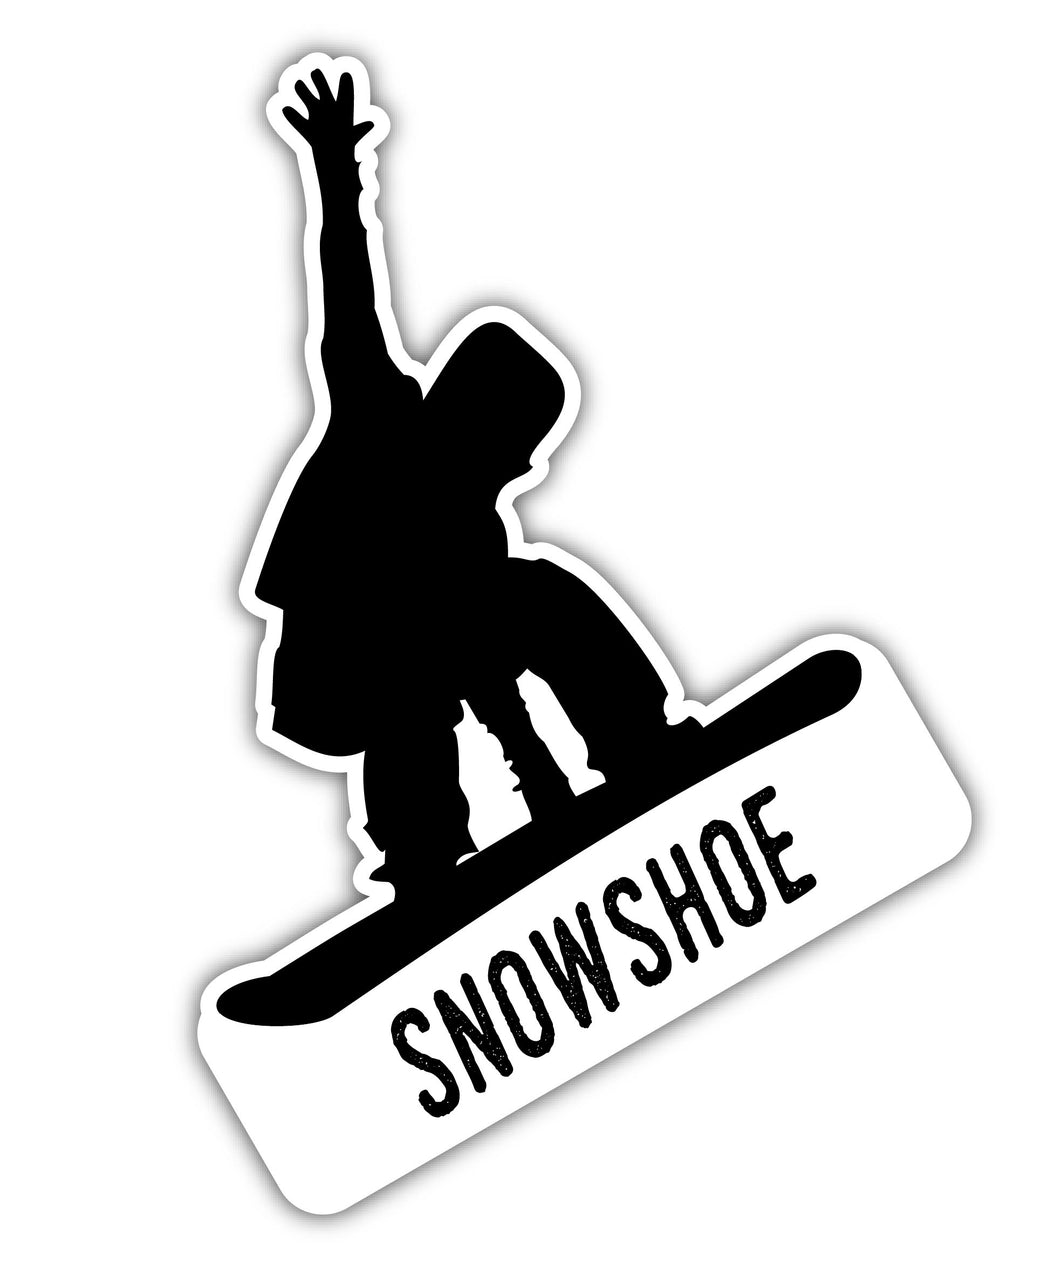 Snowshoe West Virginia Ski Adventures Souvenir 4 Inch Vinyl Decal Sticker Board Design